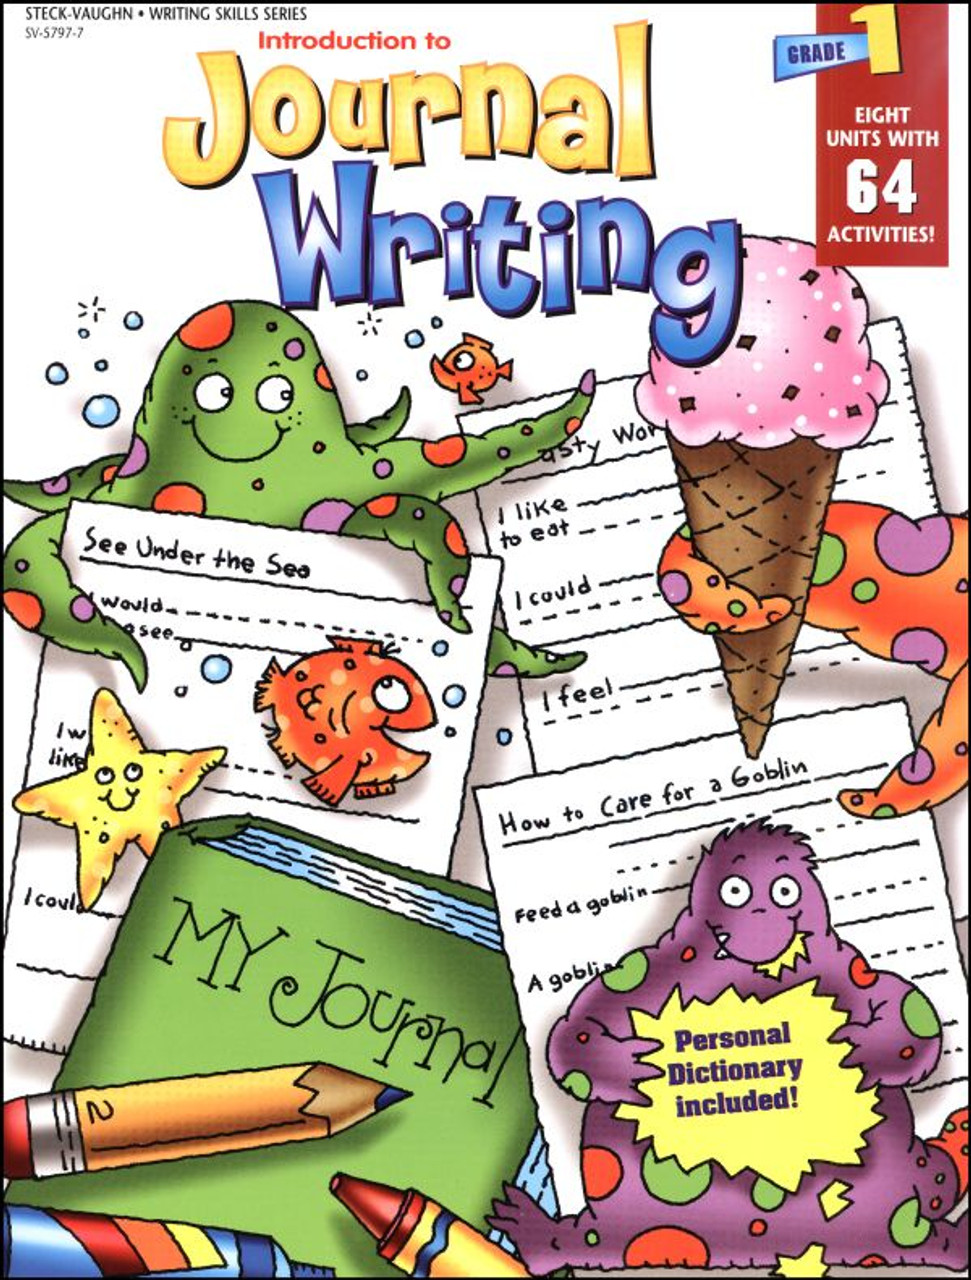 My Writing Journal Grade 1 (5-Pack)